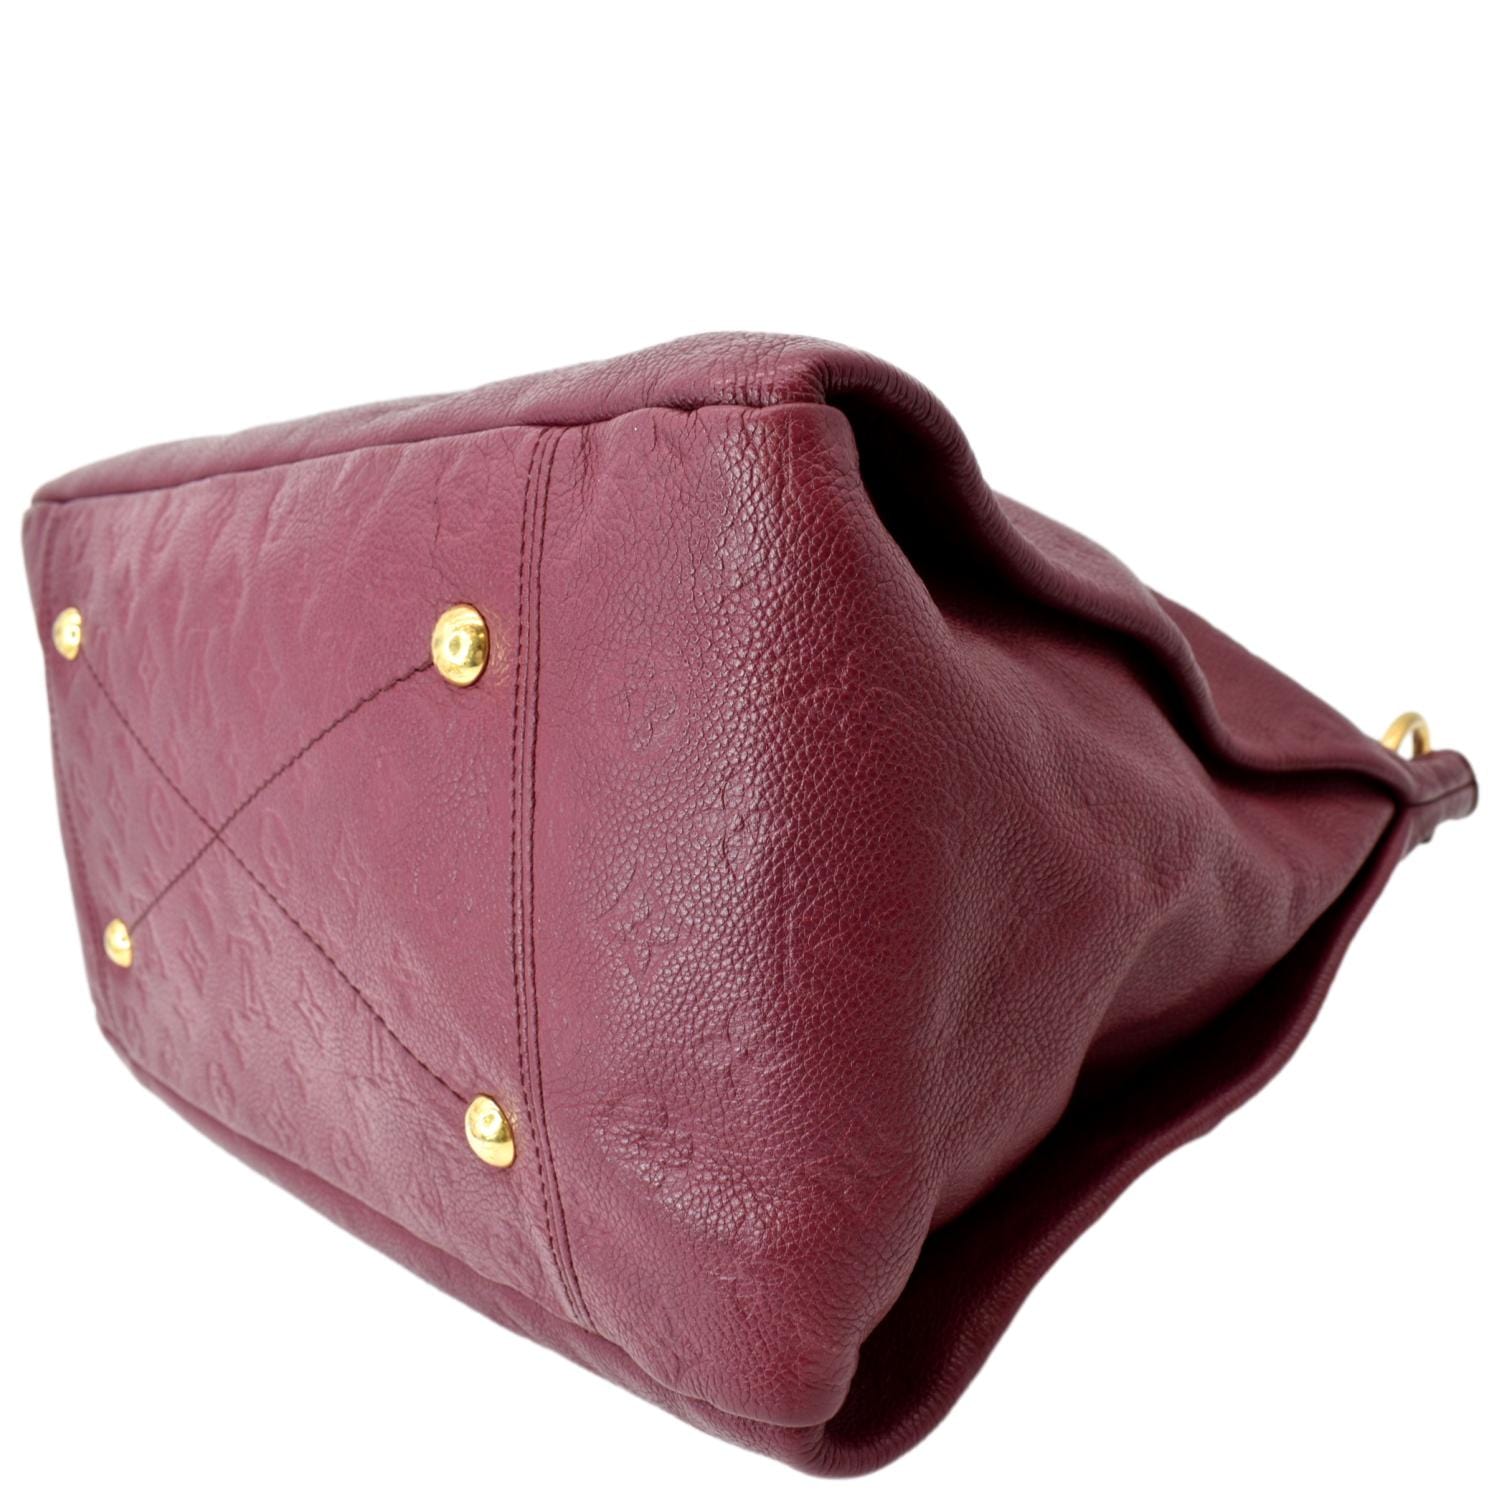 LOUIS VUITTON MONOGRAM Empreinte Artsy MM Dark Red Handbag Tote Bag #16  Rise-on